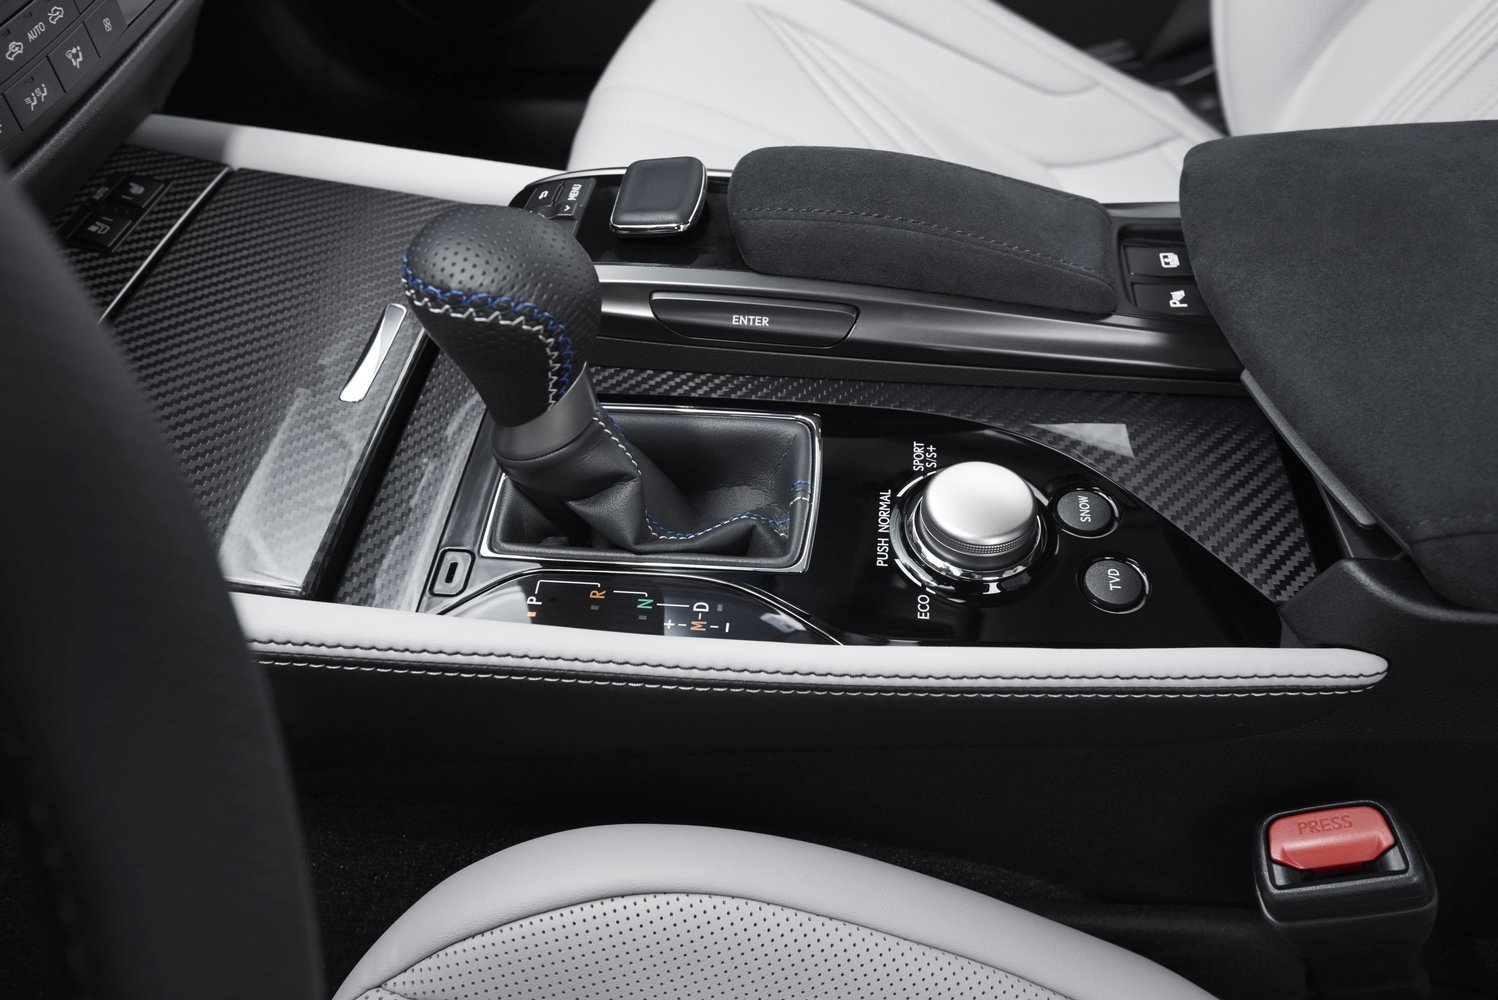 седан Lexus GS F 2015 - 2016г выпуска модификация F 5.0 AT (477 л.с.)